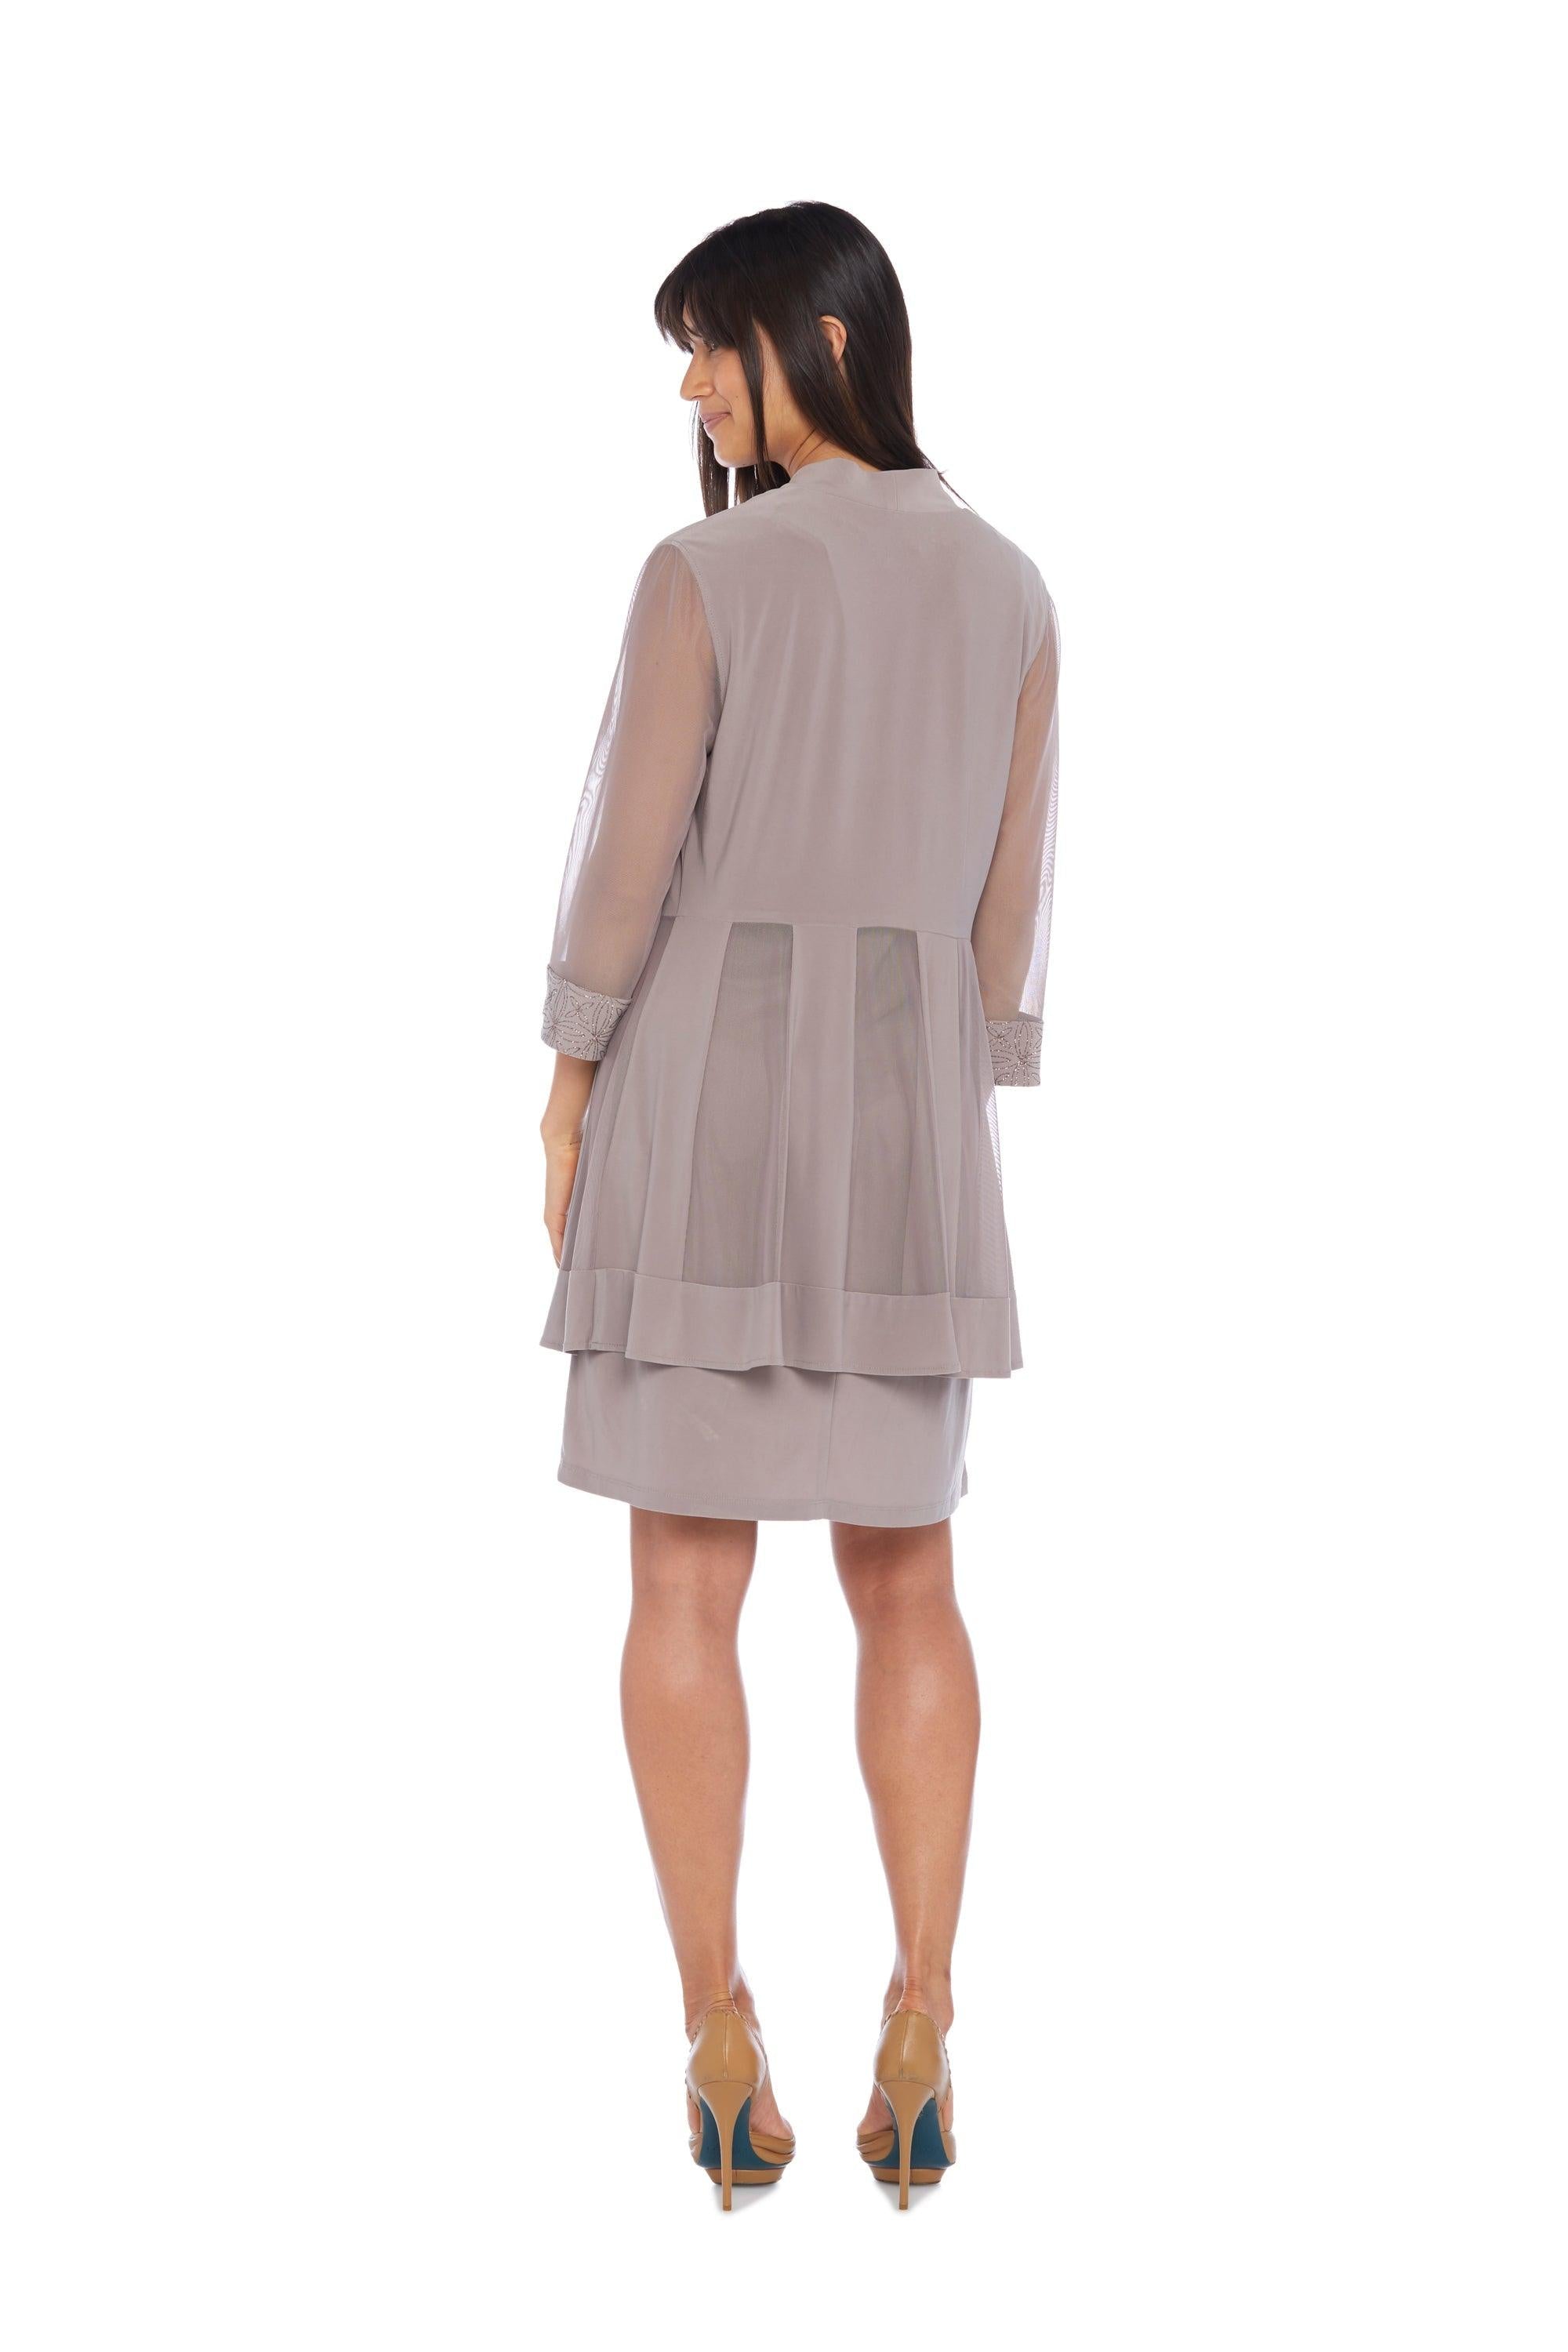 R&M Richards Short Formal Petite Jacket Dress 8271P - The Dress Outlet